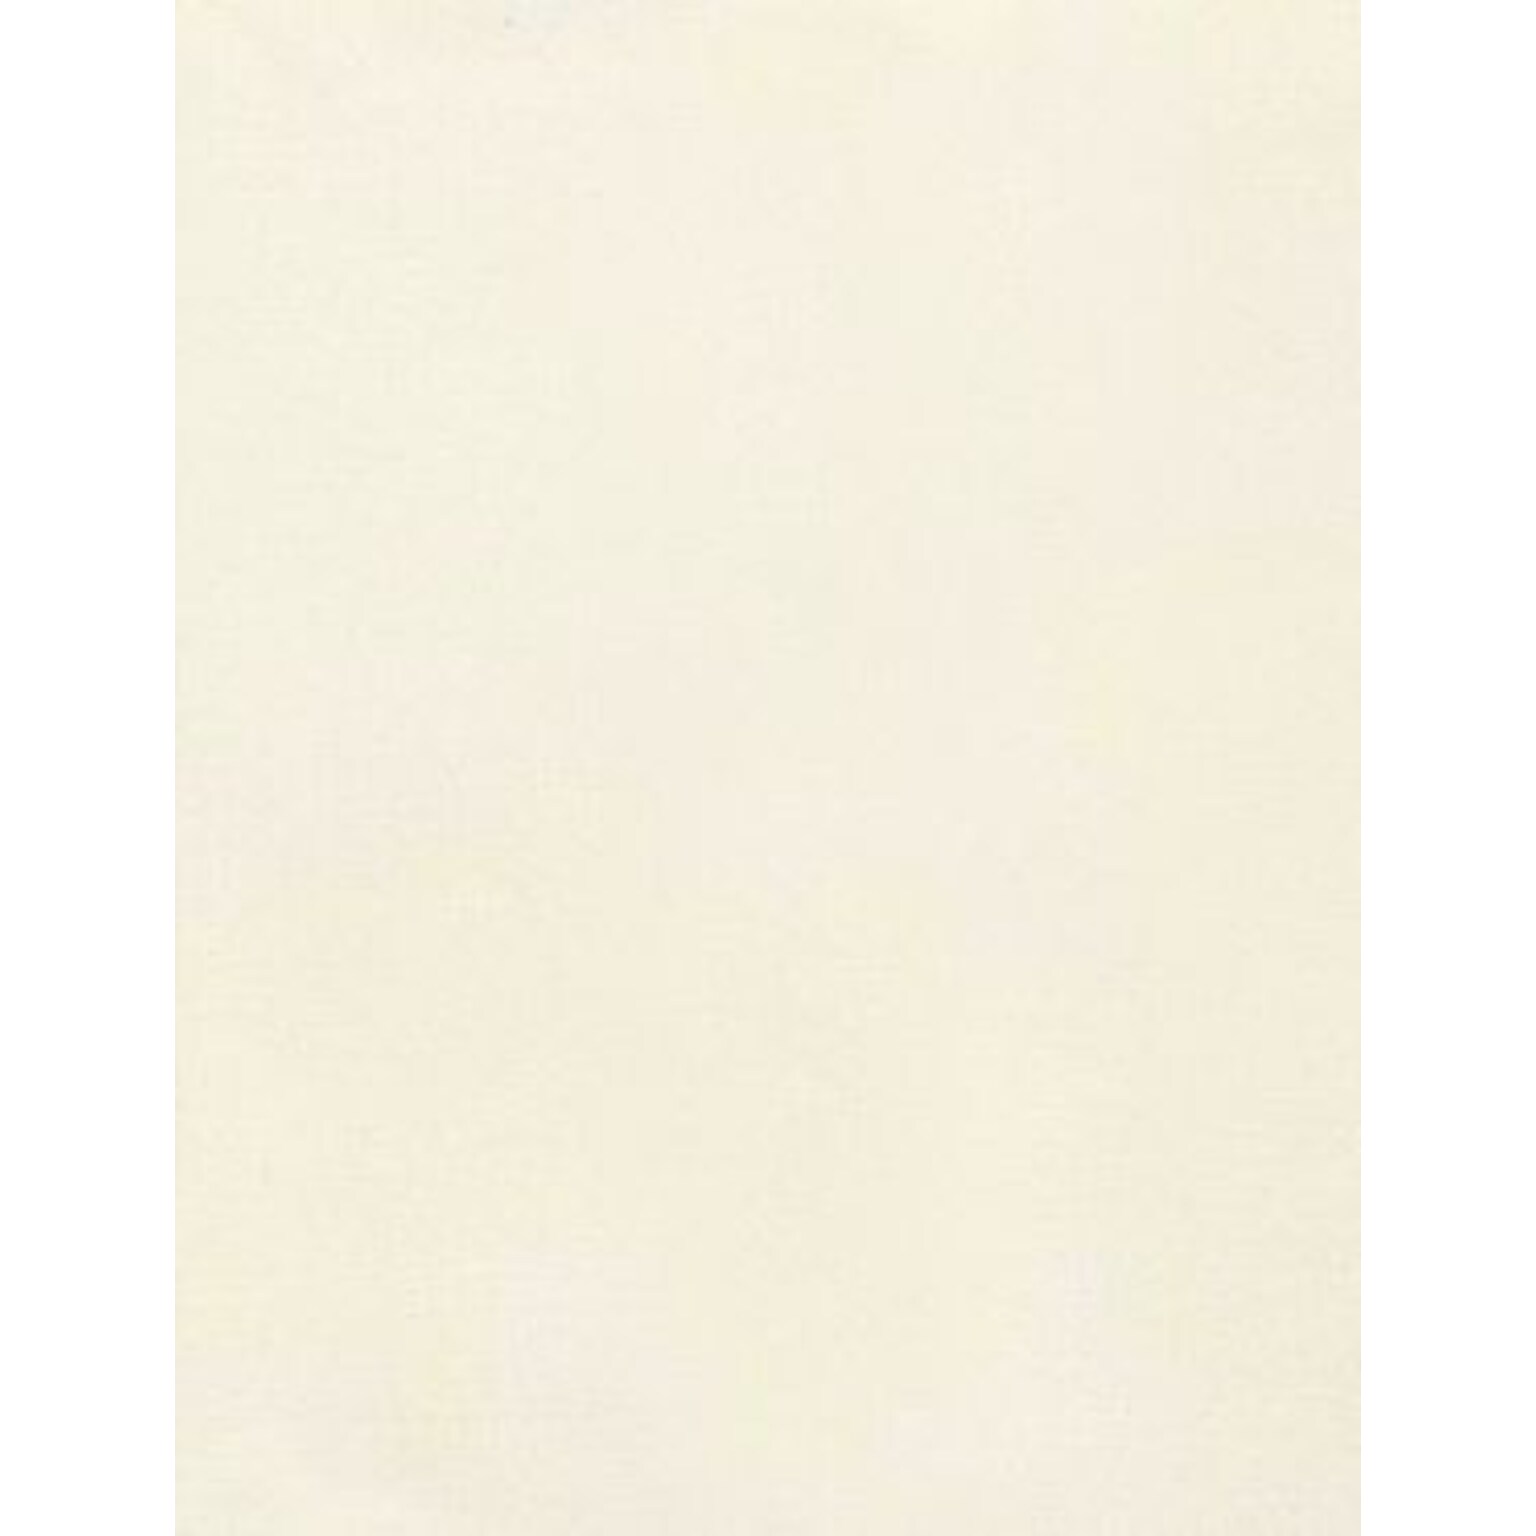 LUX 11 x 17 Color Copy Paper, 32 lbs., Natural Linen, 250 Sheets/Pack (1117-P-NLI-250)